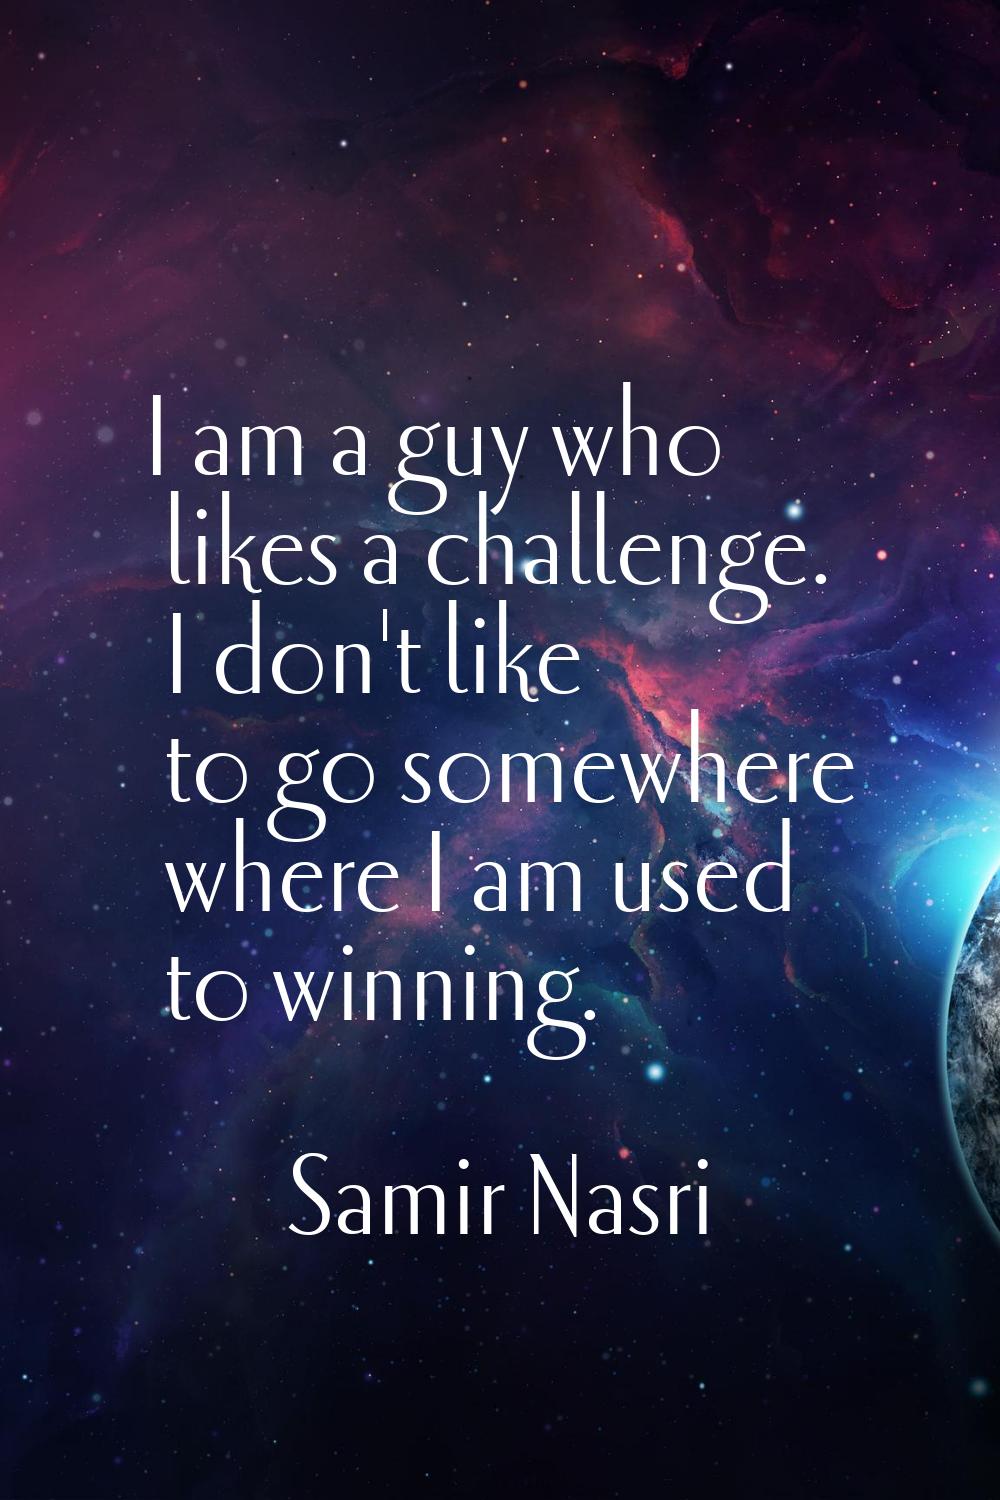 I am a guy who likes a challenge. I don't like to go somewhere where I am used to winning.